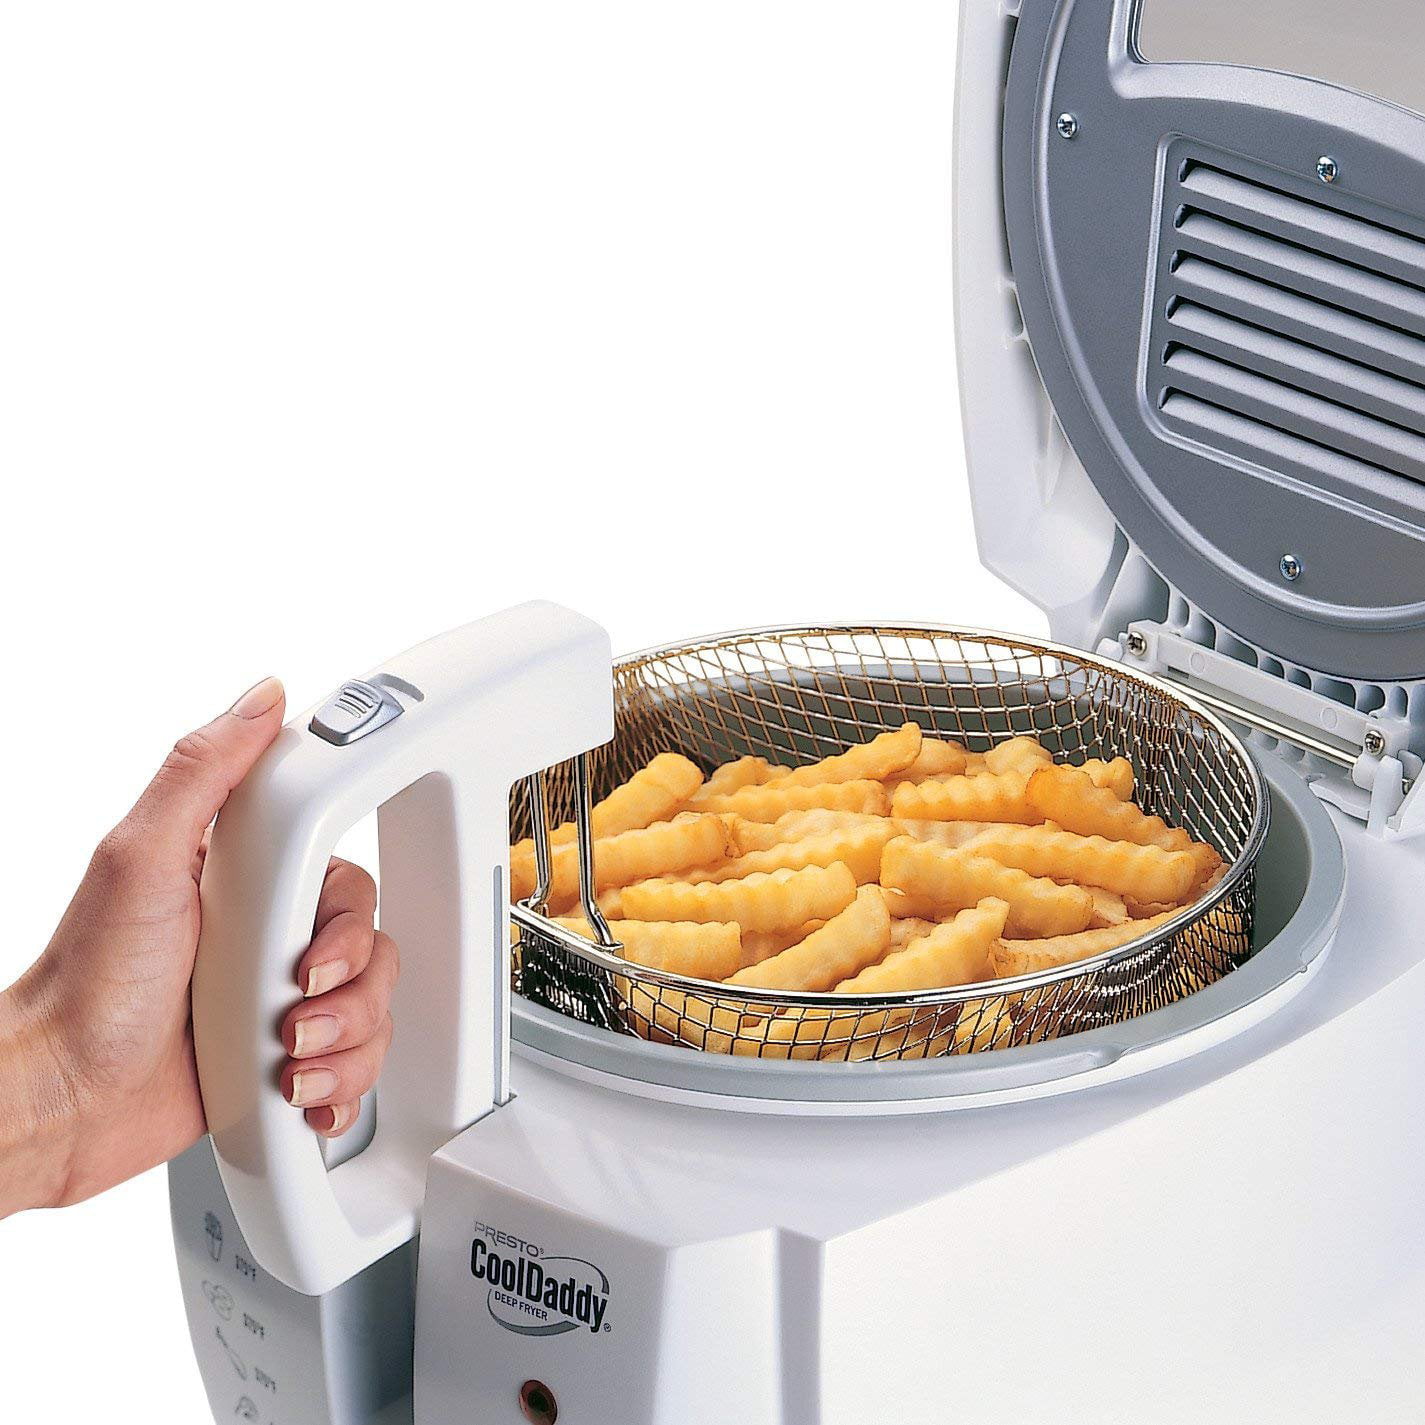 Cool Daddy Deep Fryer - appliances - by owner - sale - craigslist